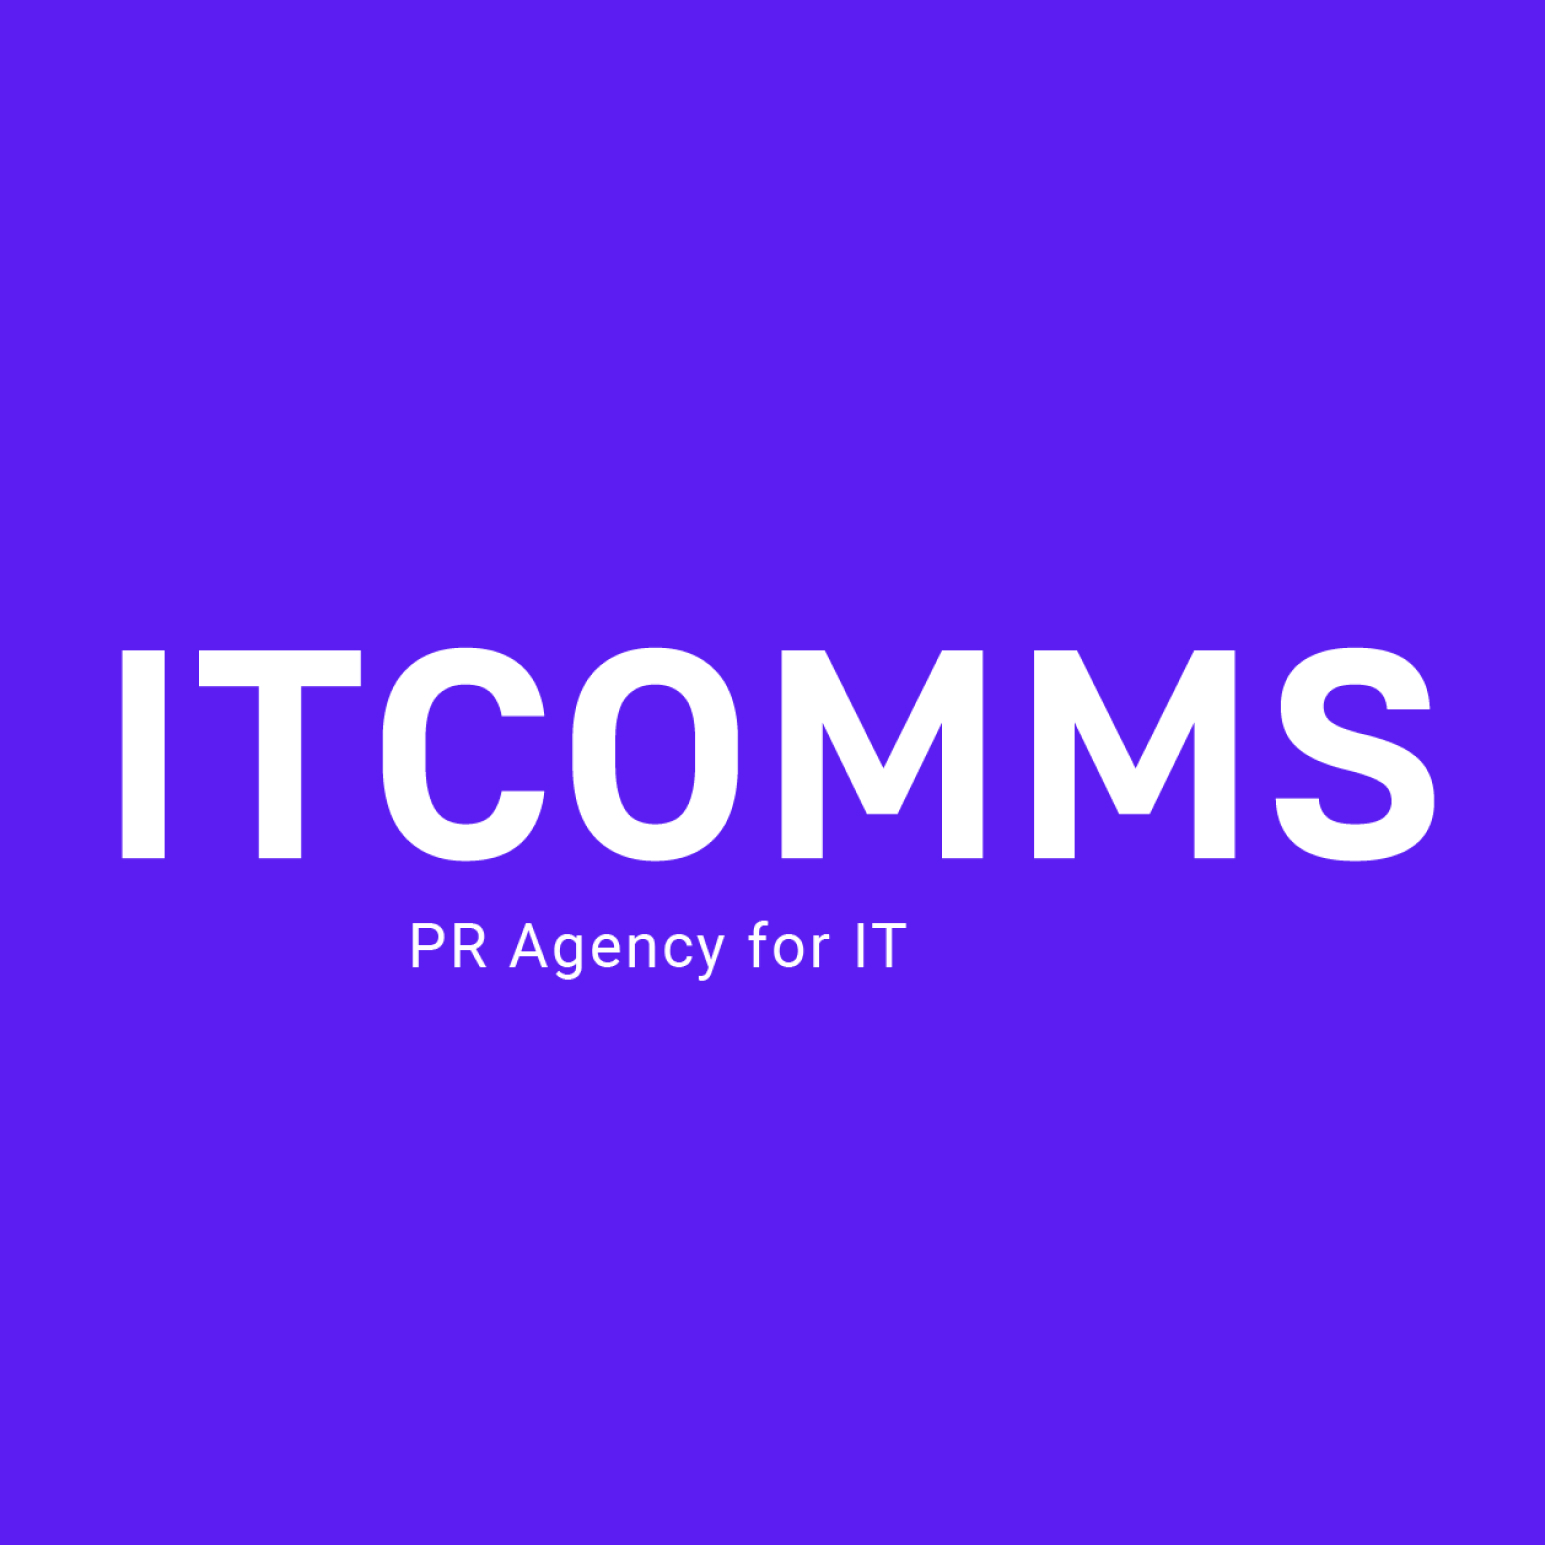 Генератор пресс-релизов на базе AI PR-агентства ITCOMMS